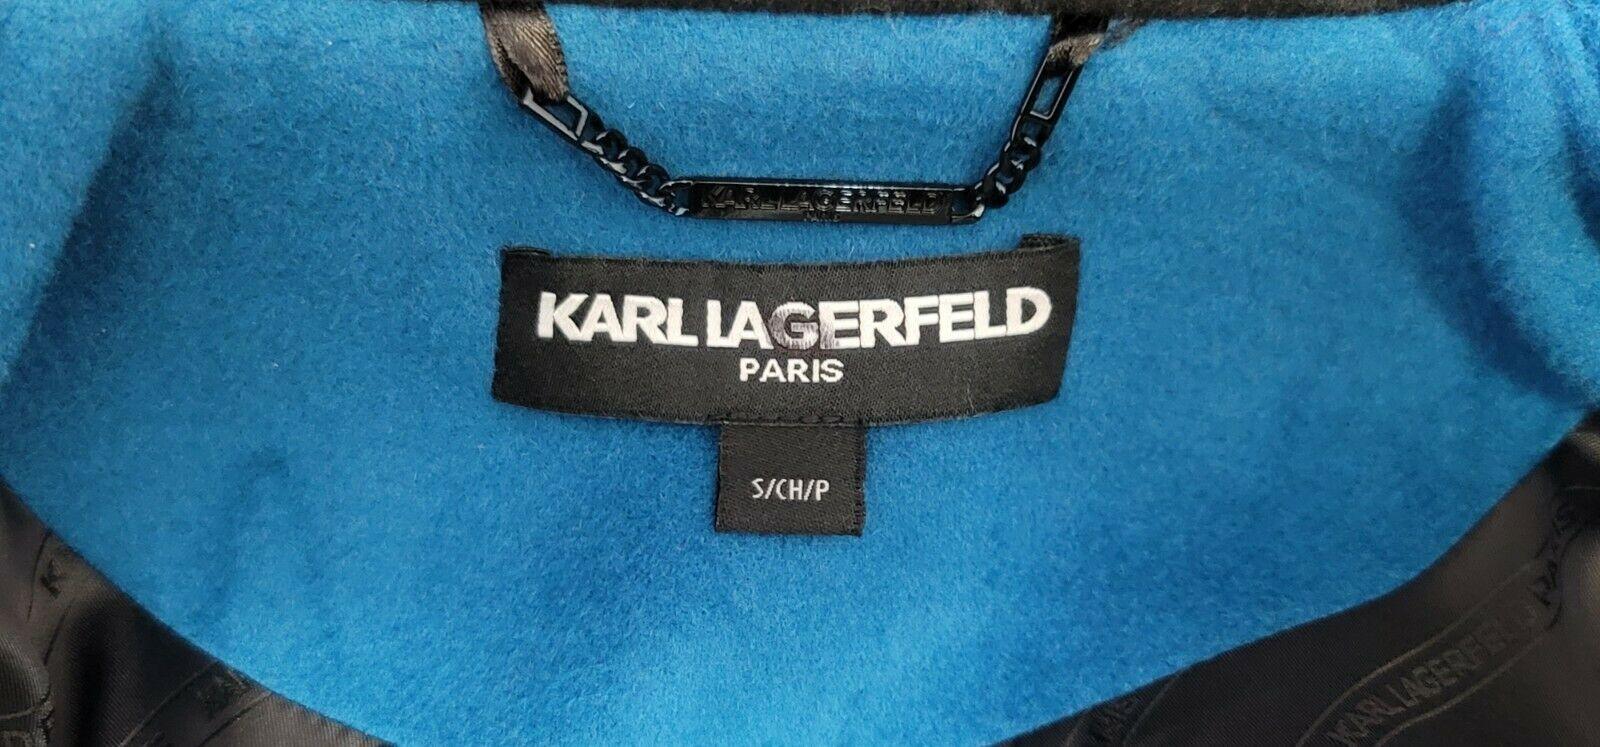 Karl Lagerfeld Women's Classic Elegant Coat Blue Wool Bland Coat Size S - SVNYFancy